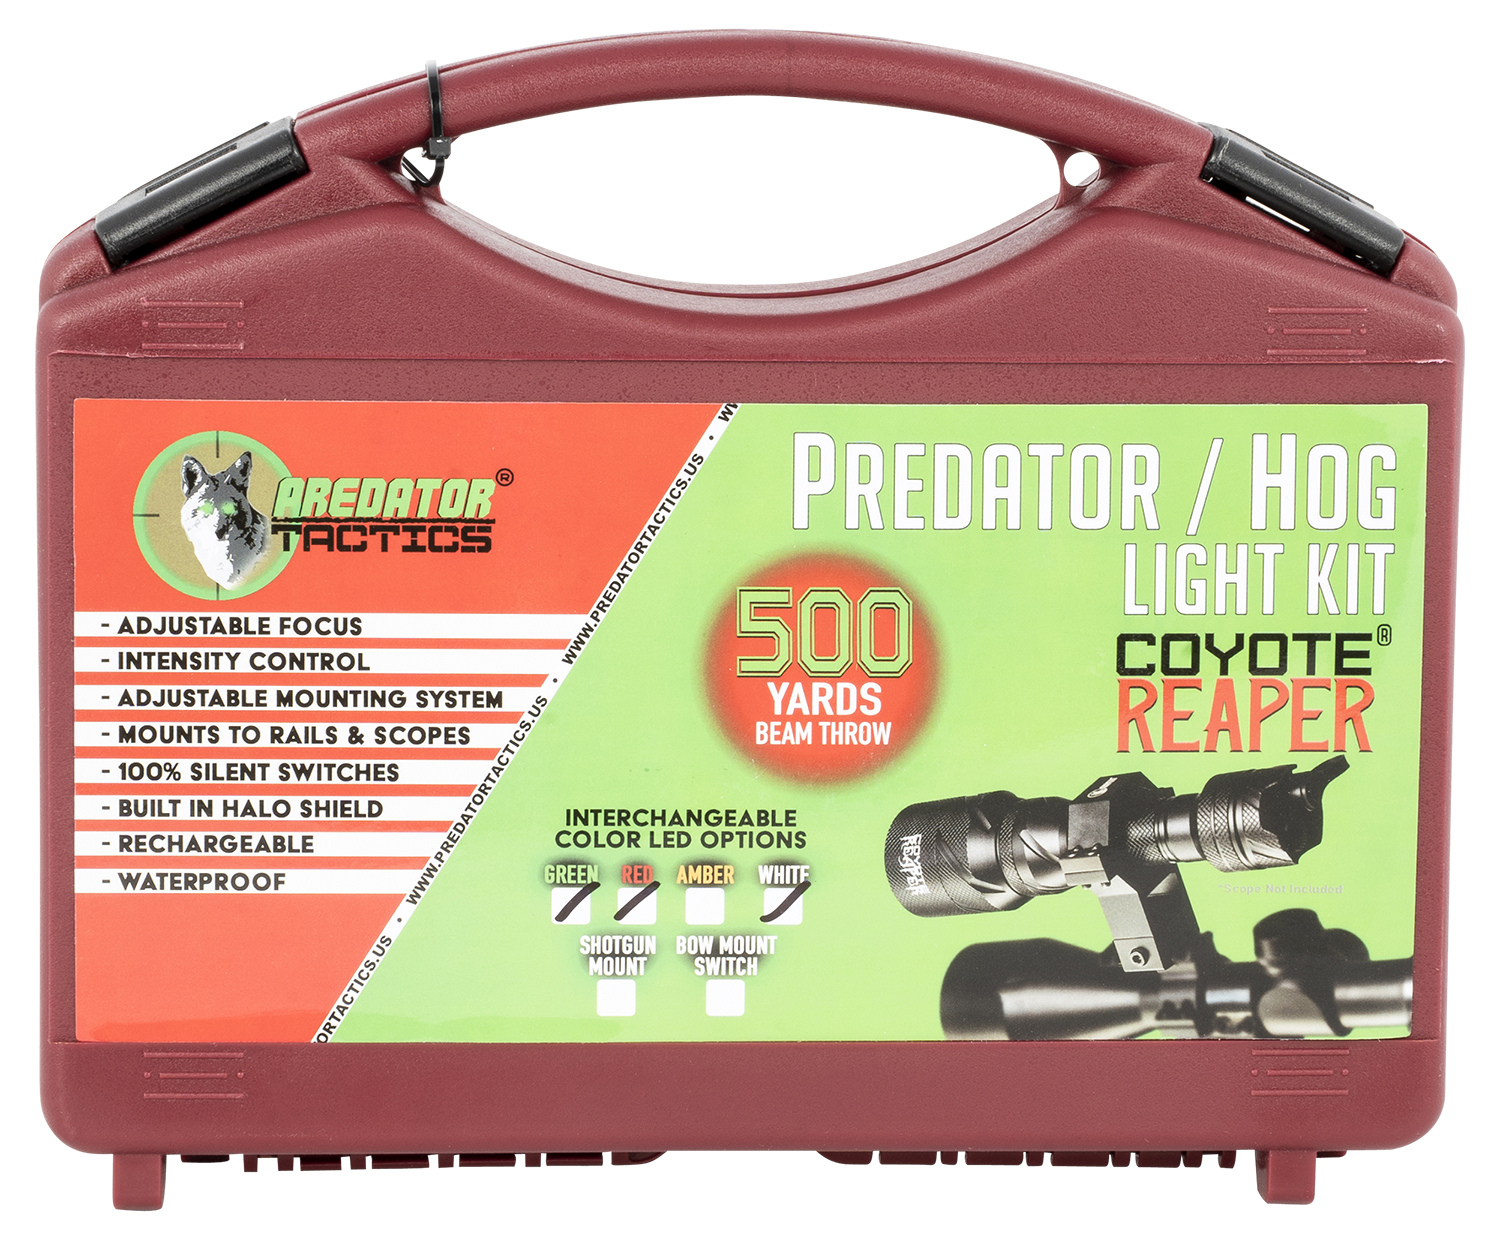 Predator Tactics 97526 Coyote Reaper Rifle Edition For Rifle Red/Green/White LED Light 500 yds Beam QR Weaver/Picatinny Mount Matte Black